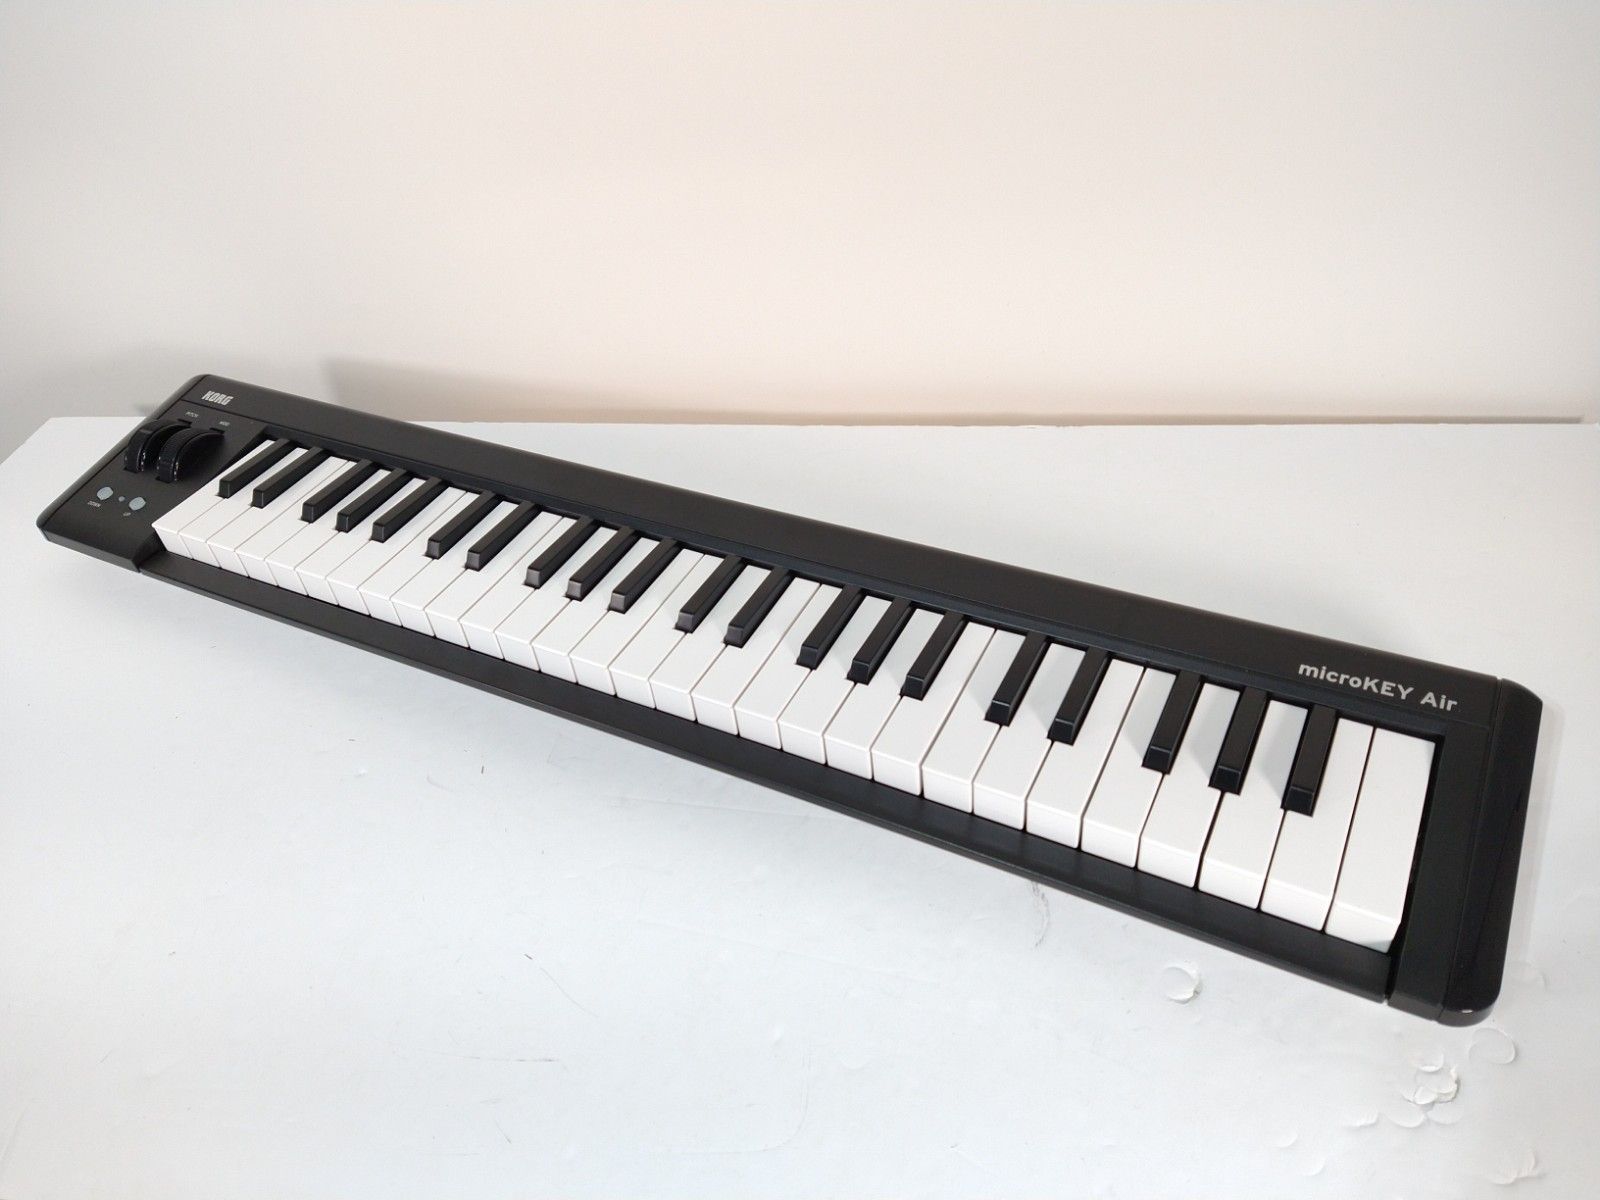 KORG microKEY2 Air 49鍵盤 bluetooth - 鍵盤楽器